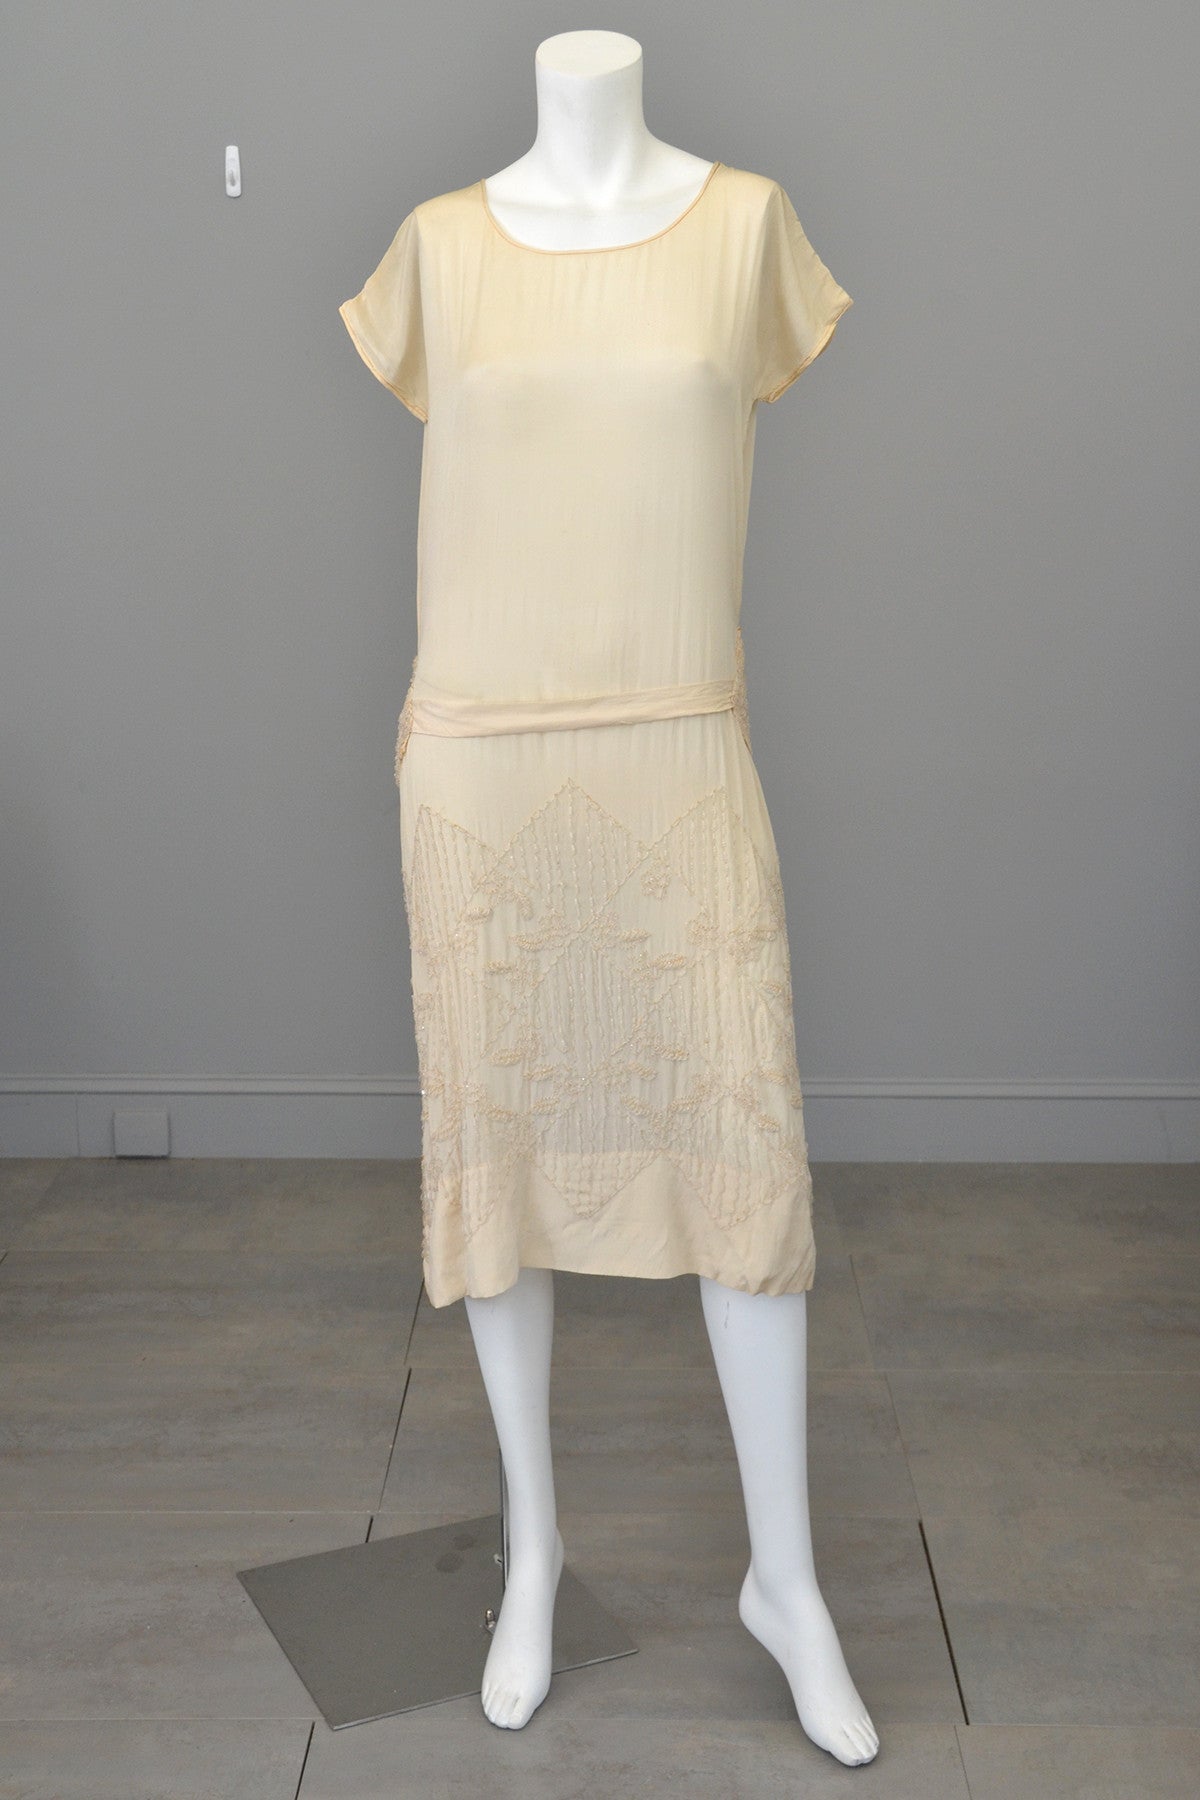 1920s sheath dress